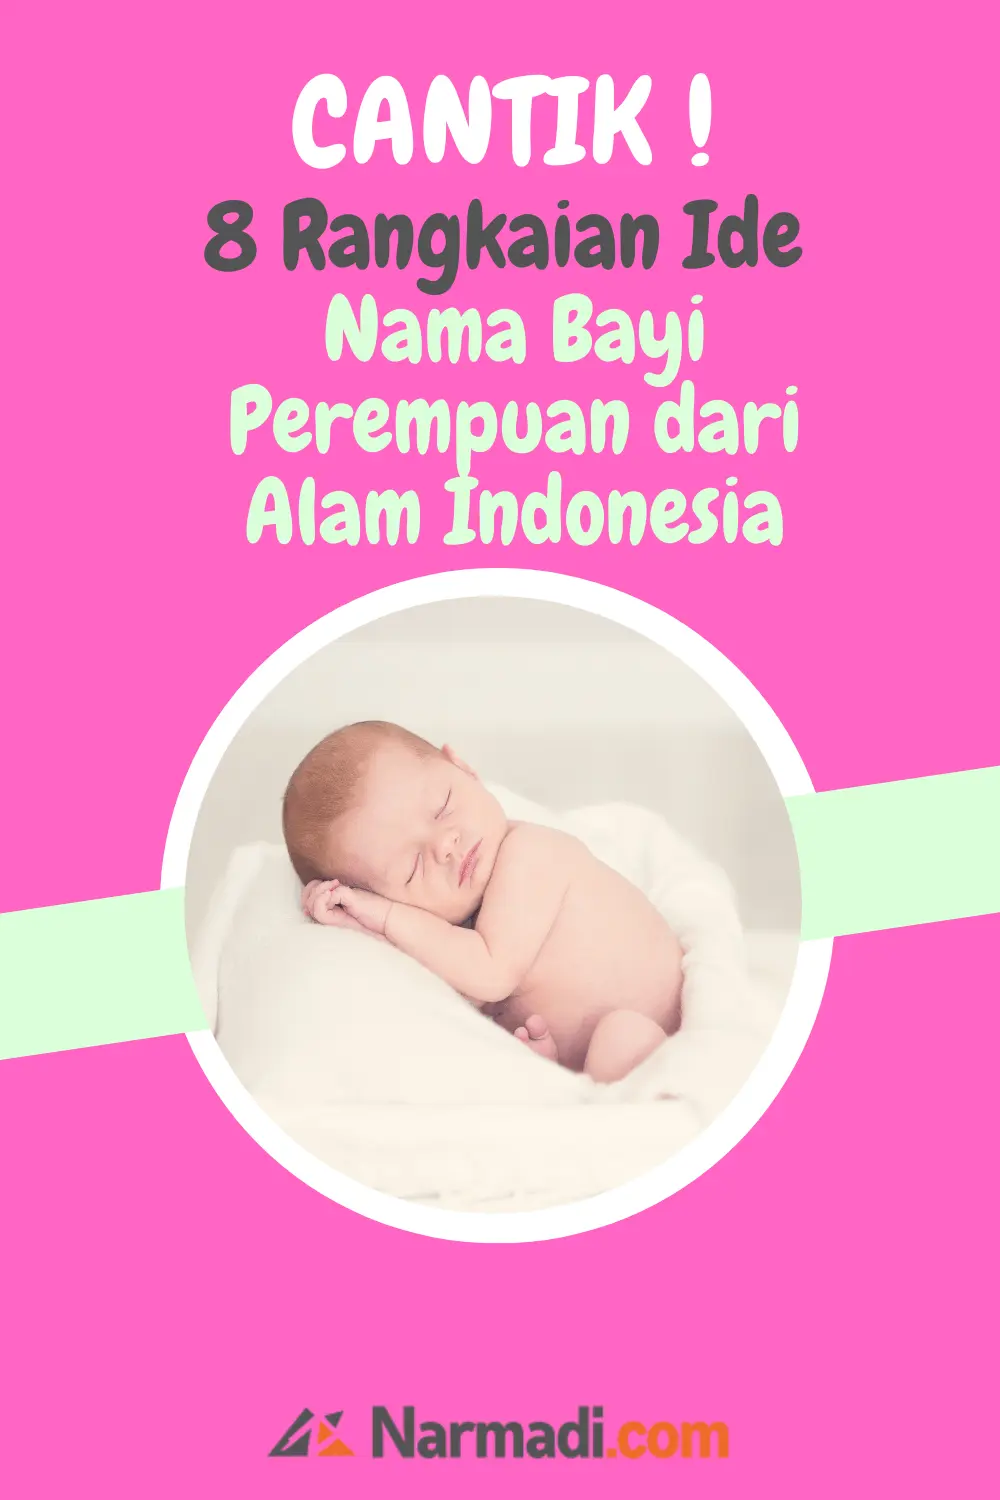 Cantik! 8 Rangkaian Nama Bayi Perempuan dari Alam Indonesia